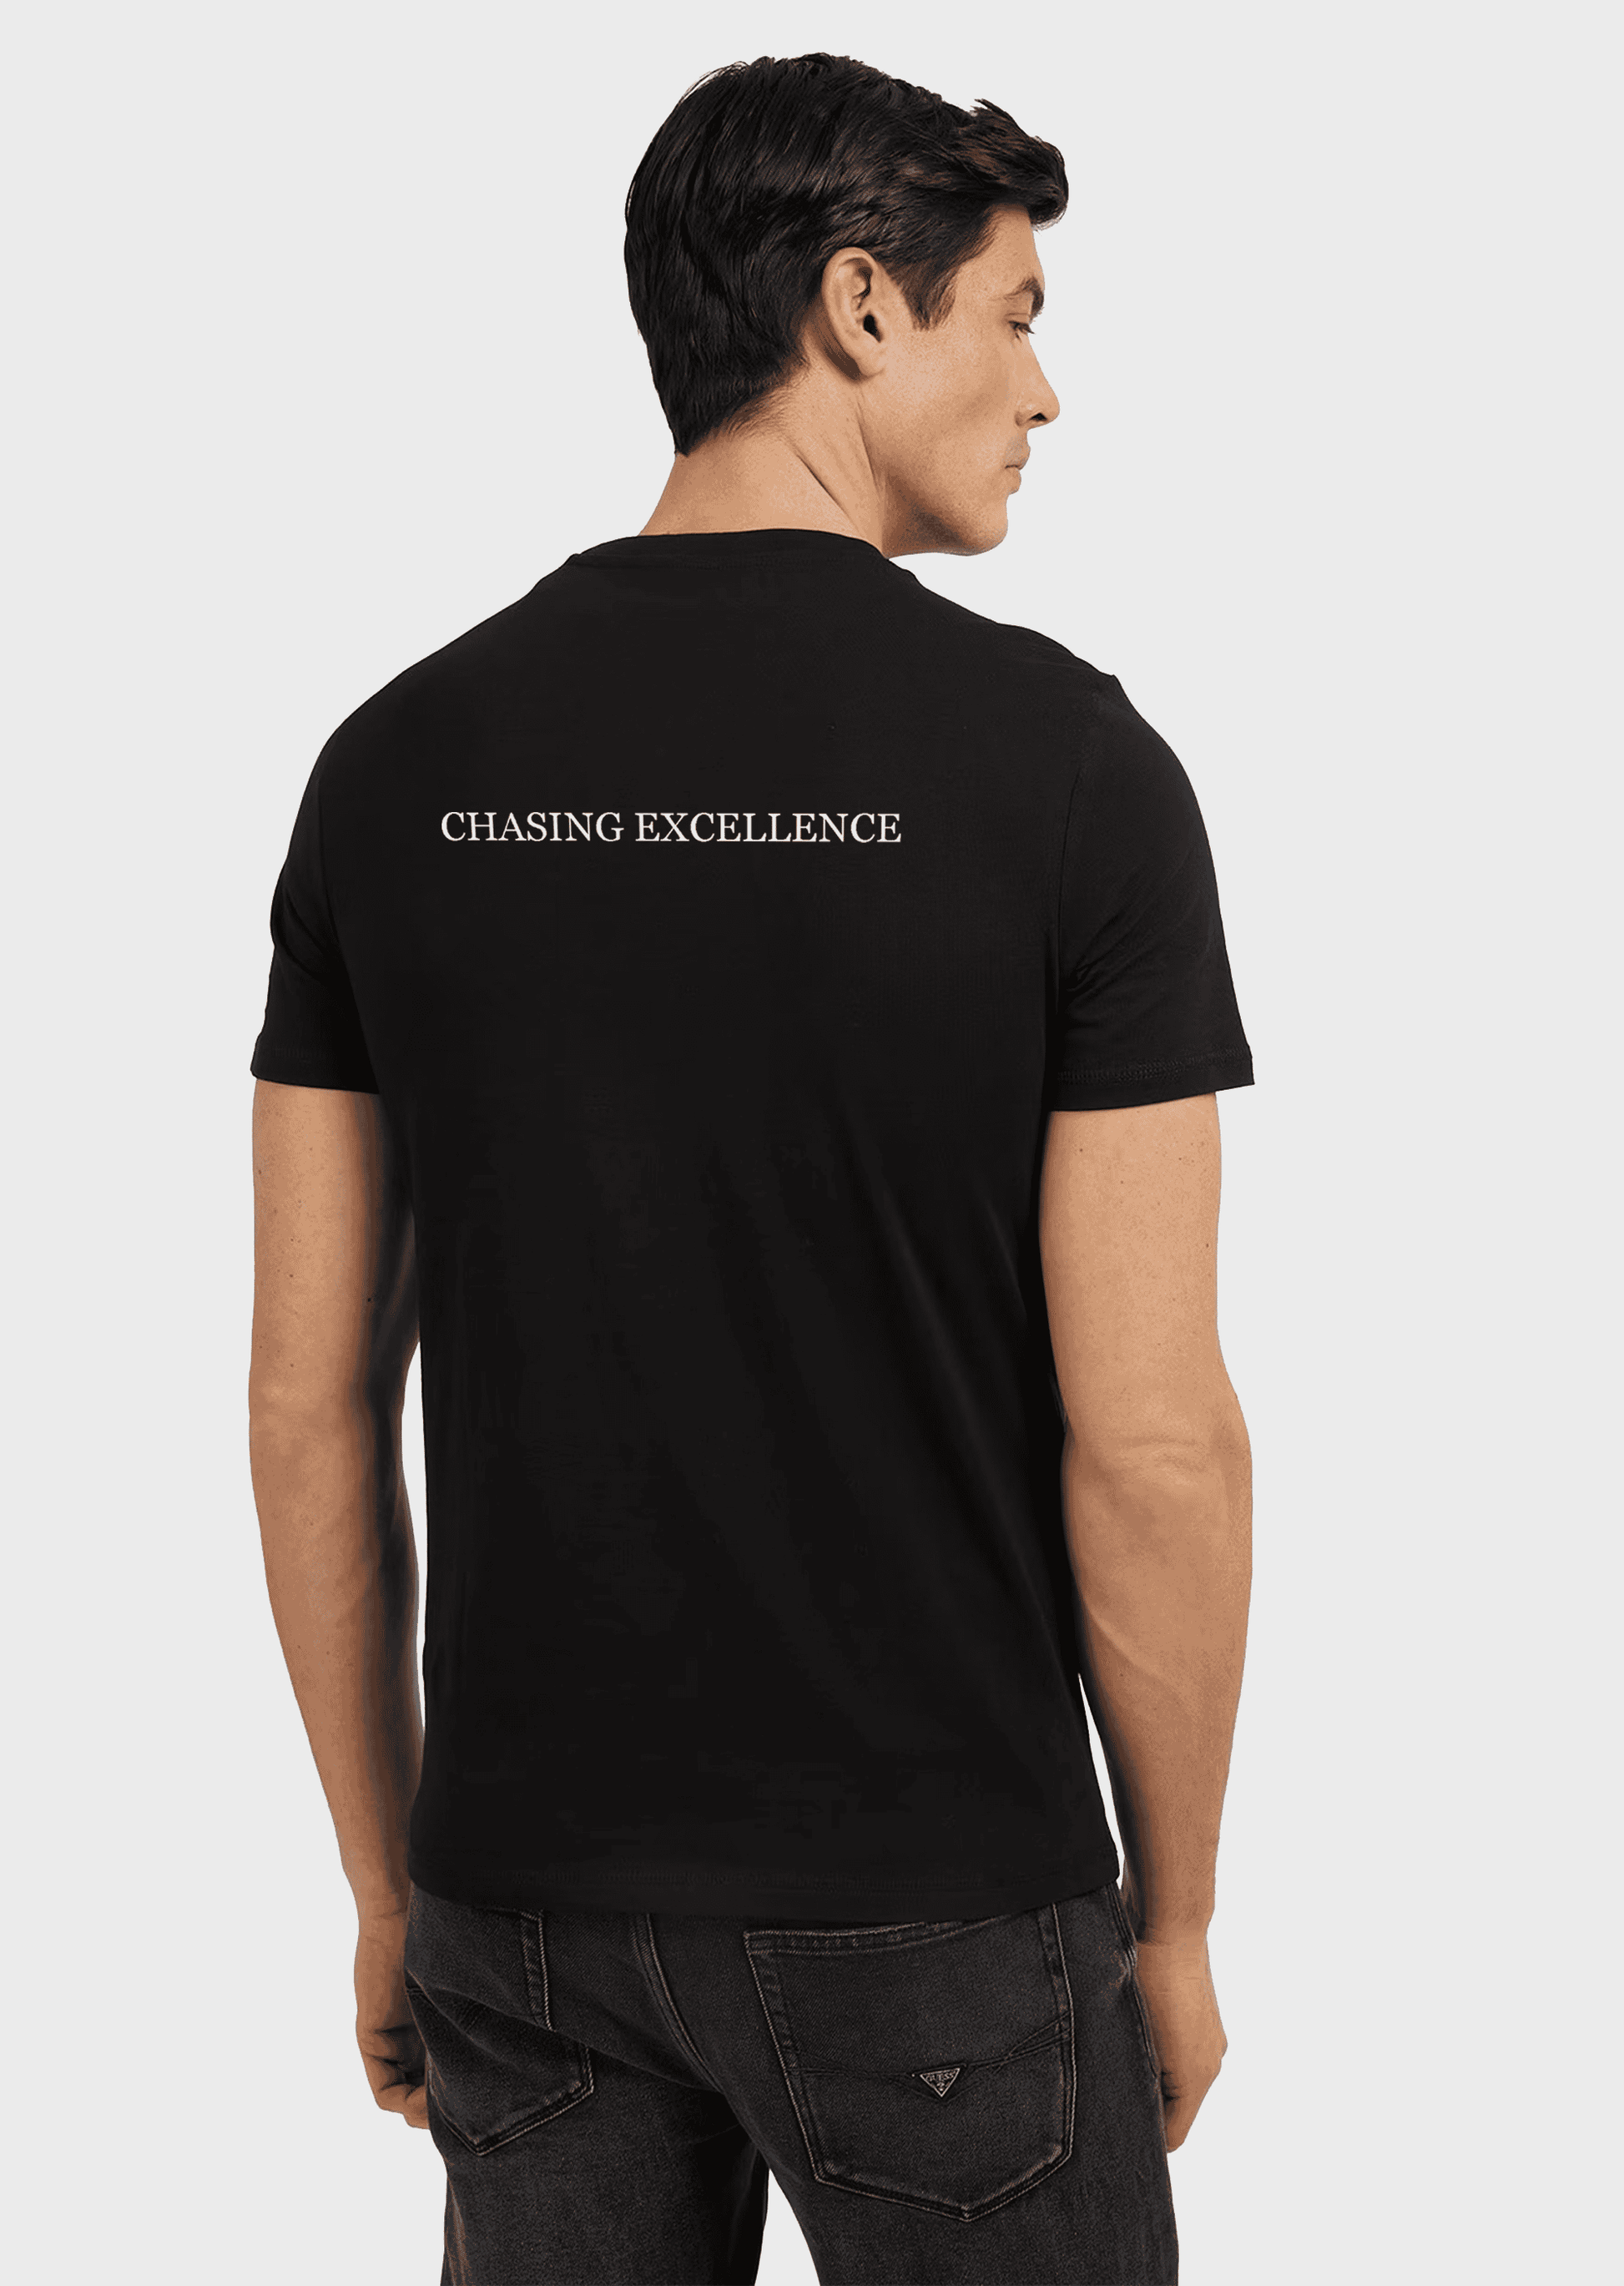 The Virtus T-Shirt Store Virtus – Apparel